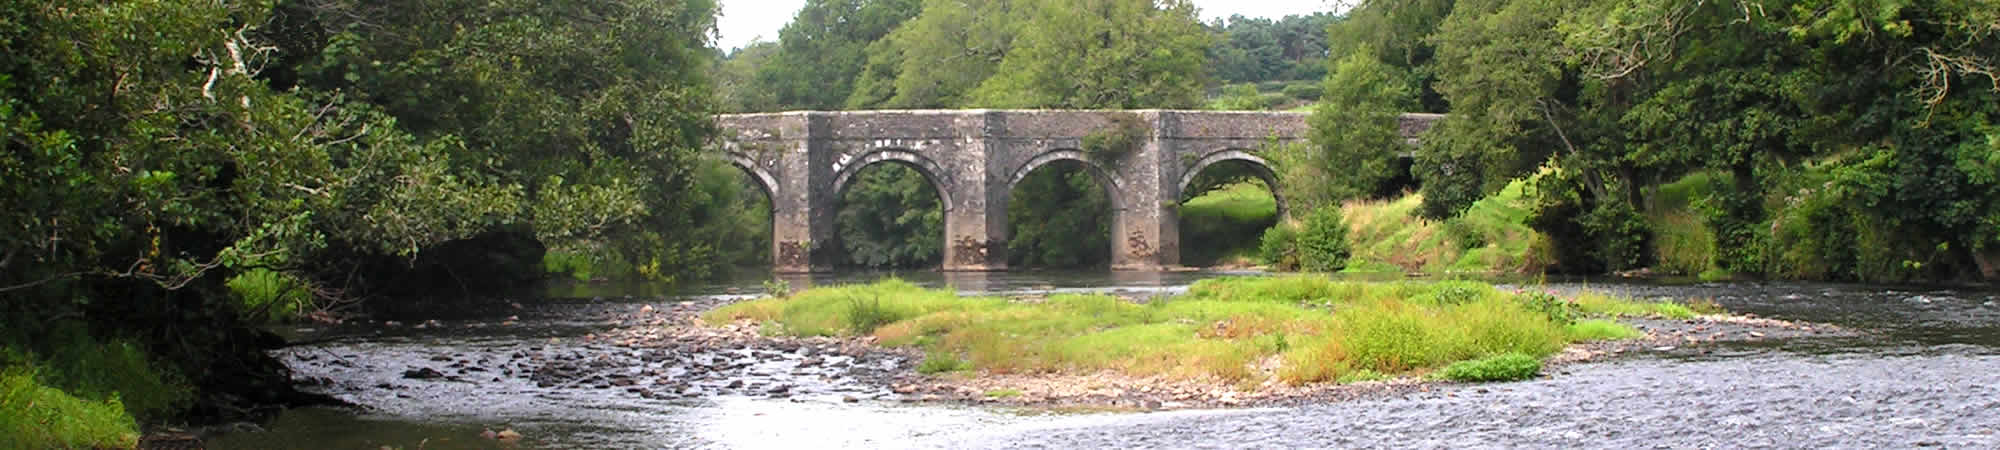 The ancient Horsebridge over the River Tamar